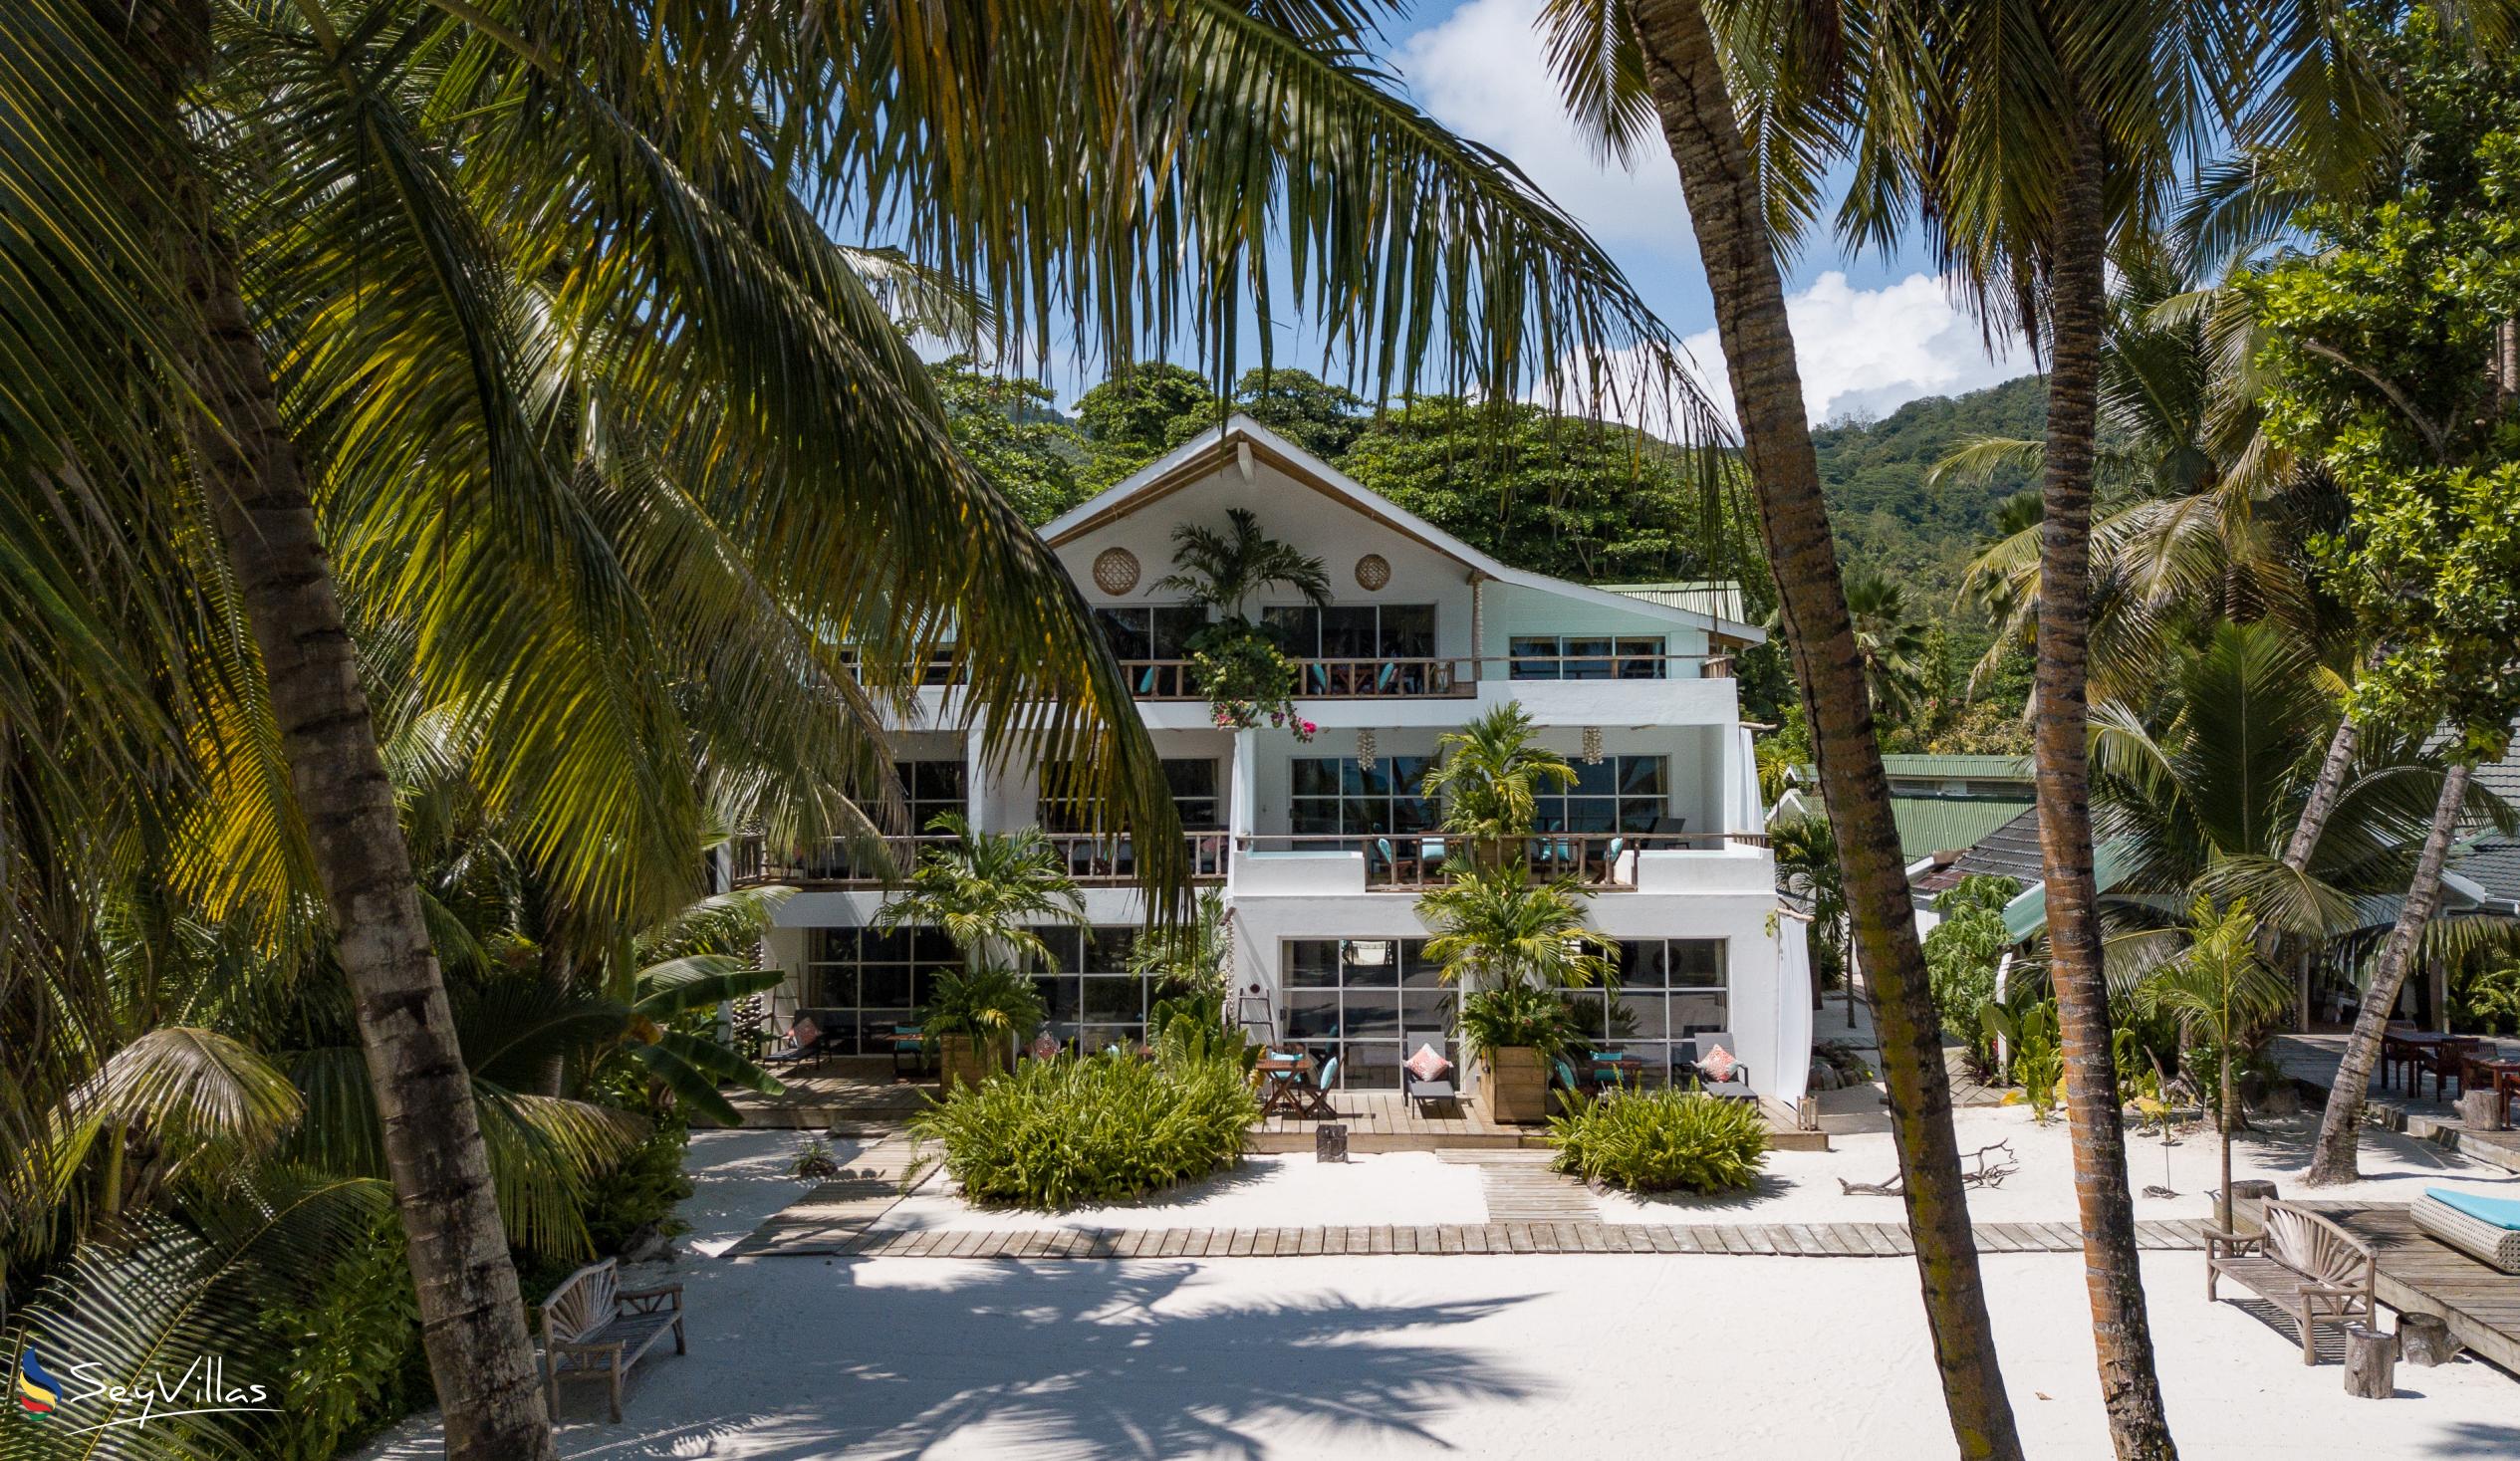 Photo 102: Bliss Hotel Praslin - Beach House - Beach Deluxe Room - Praslin (Seychelles)